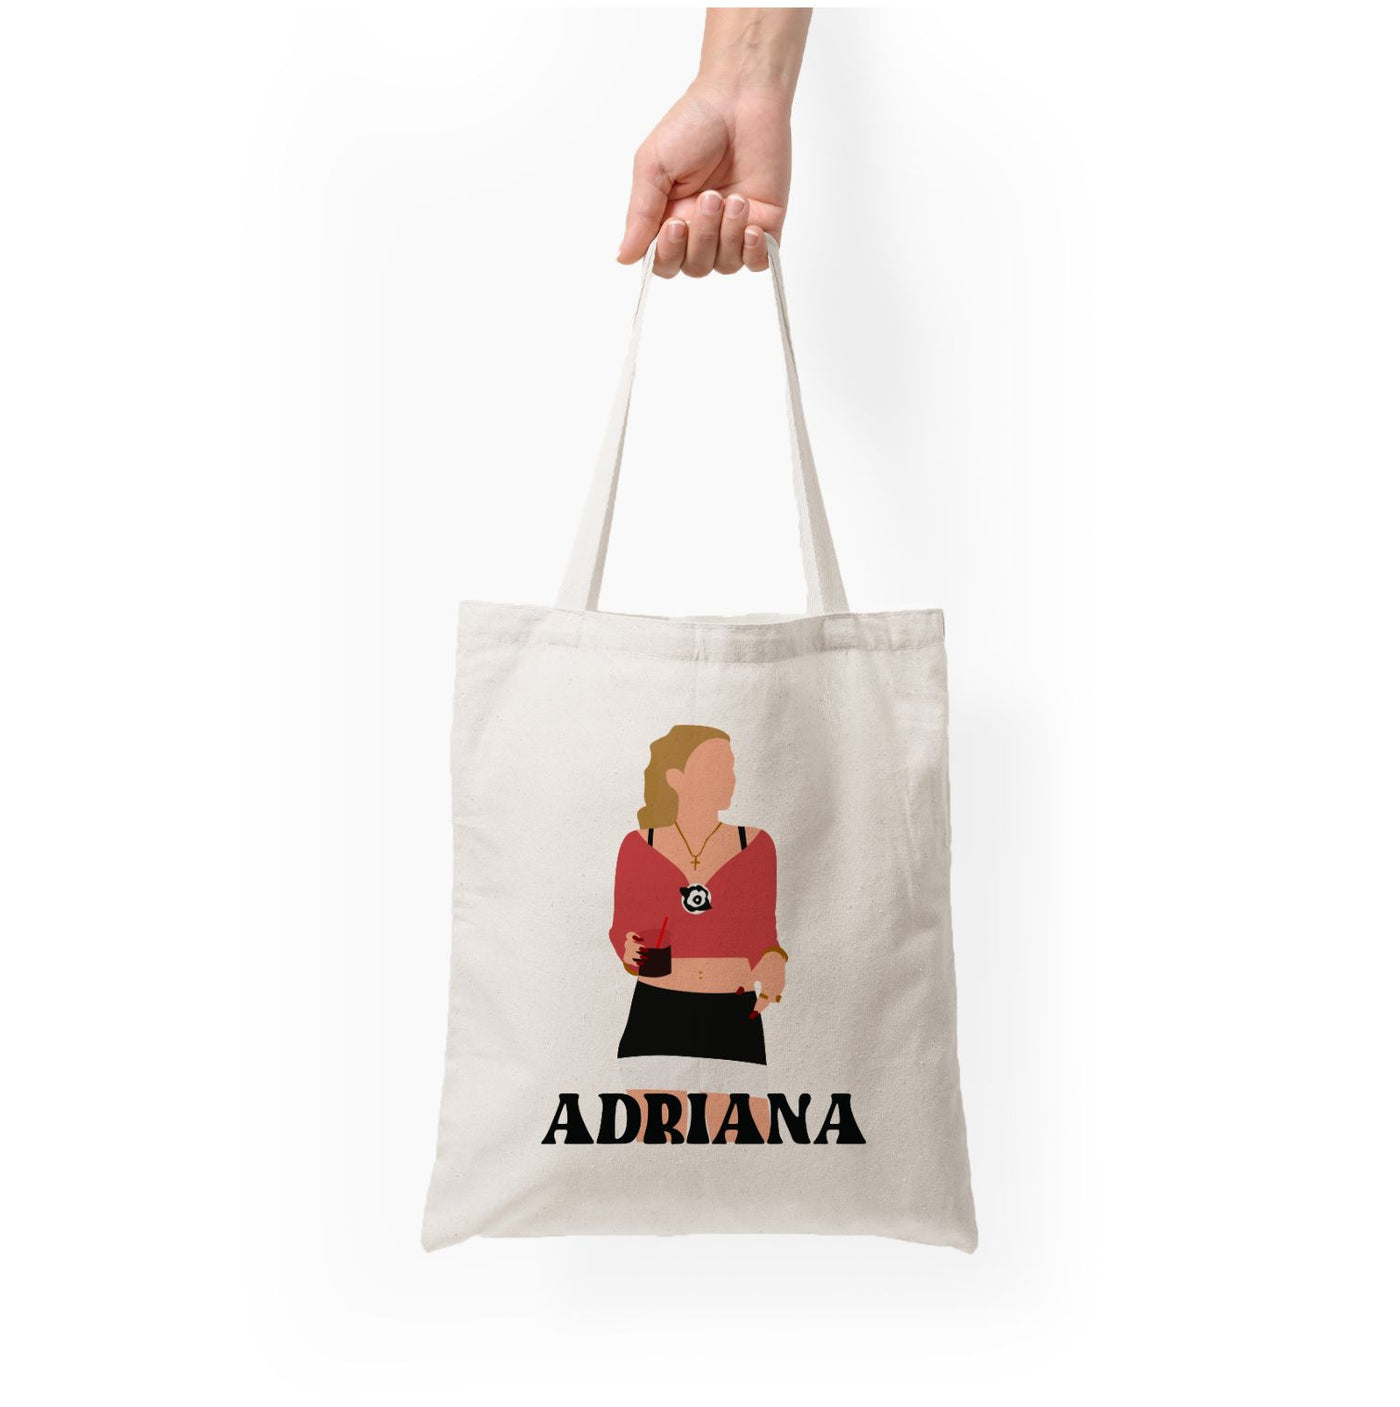 Adriana - The Sopranos Tote Bag